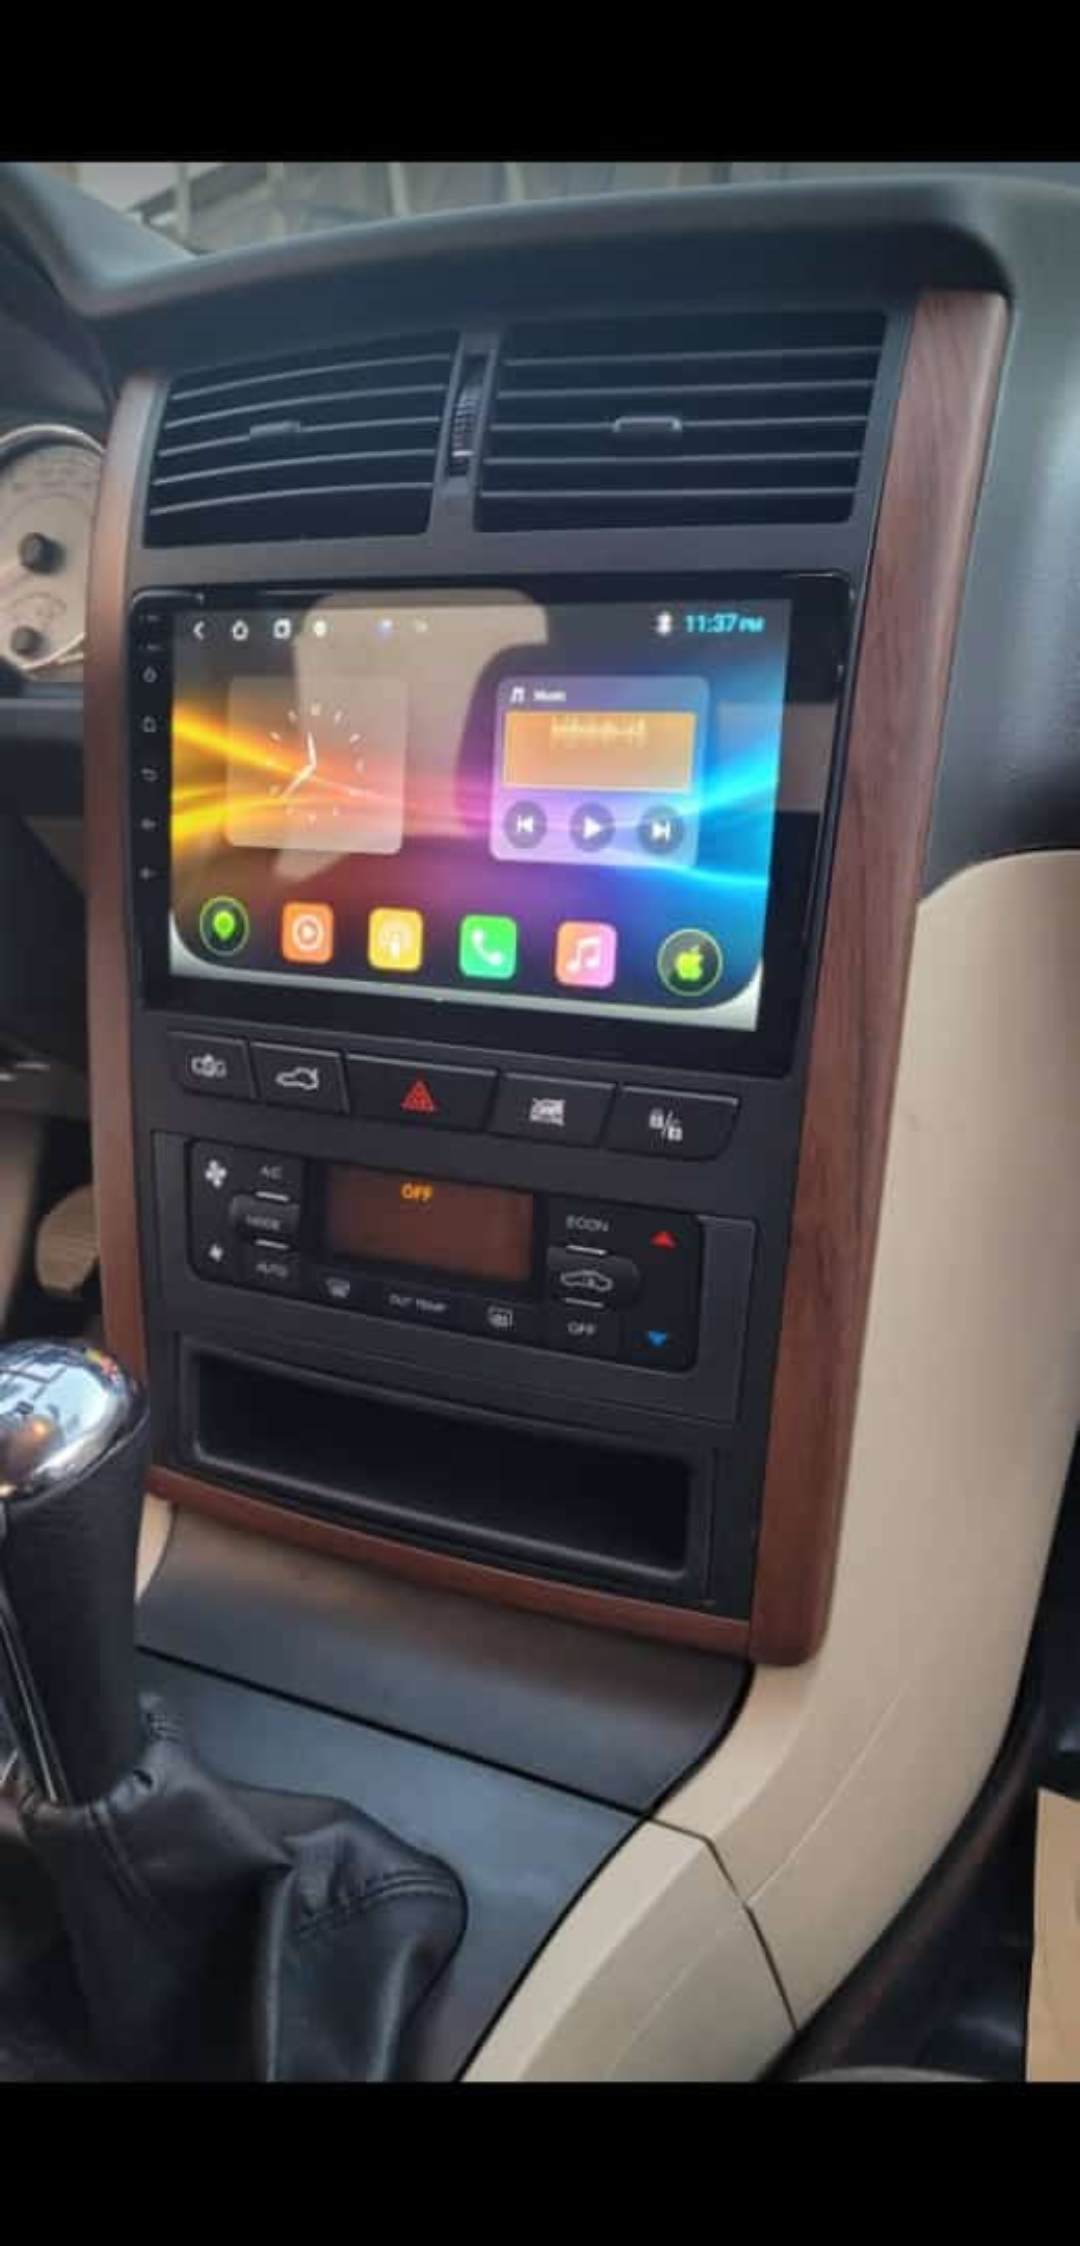 Peugeot Pars android monitor 11 inch ROM 2 mtk model vox media brand